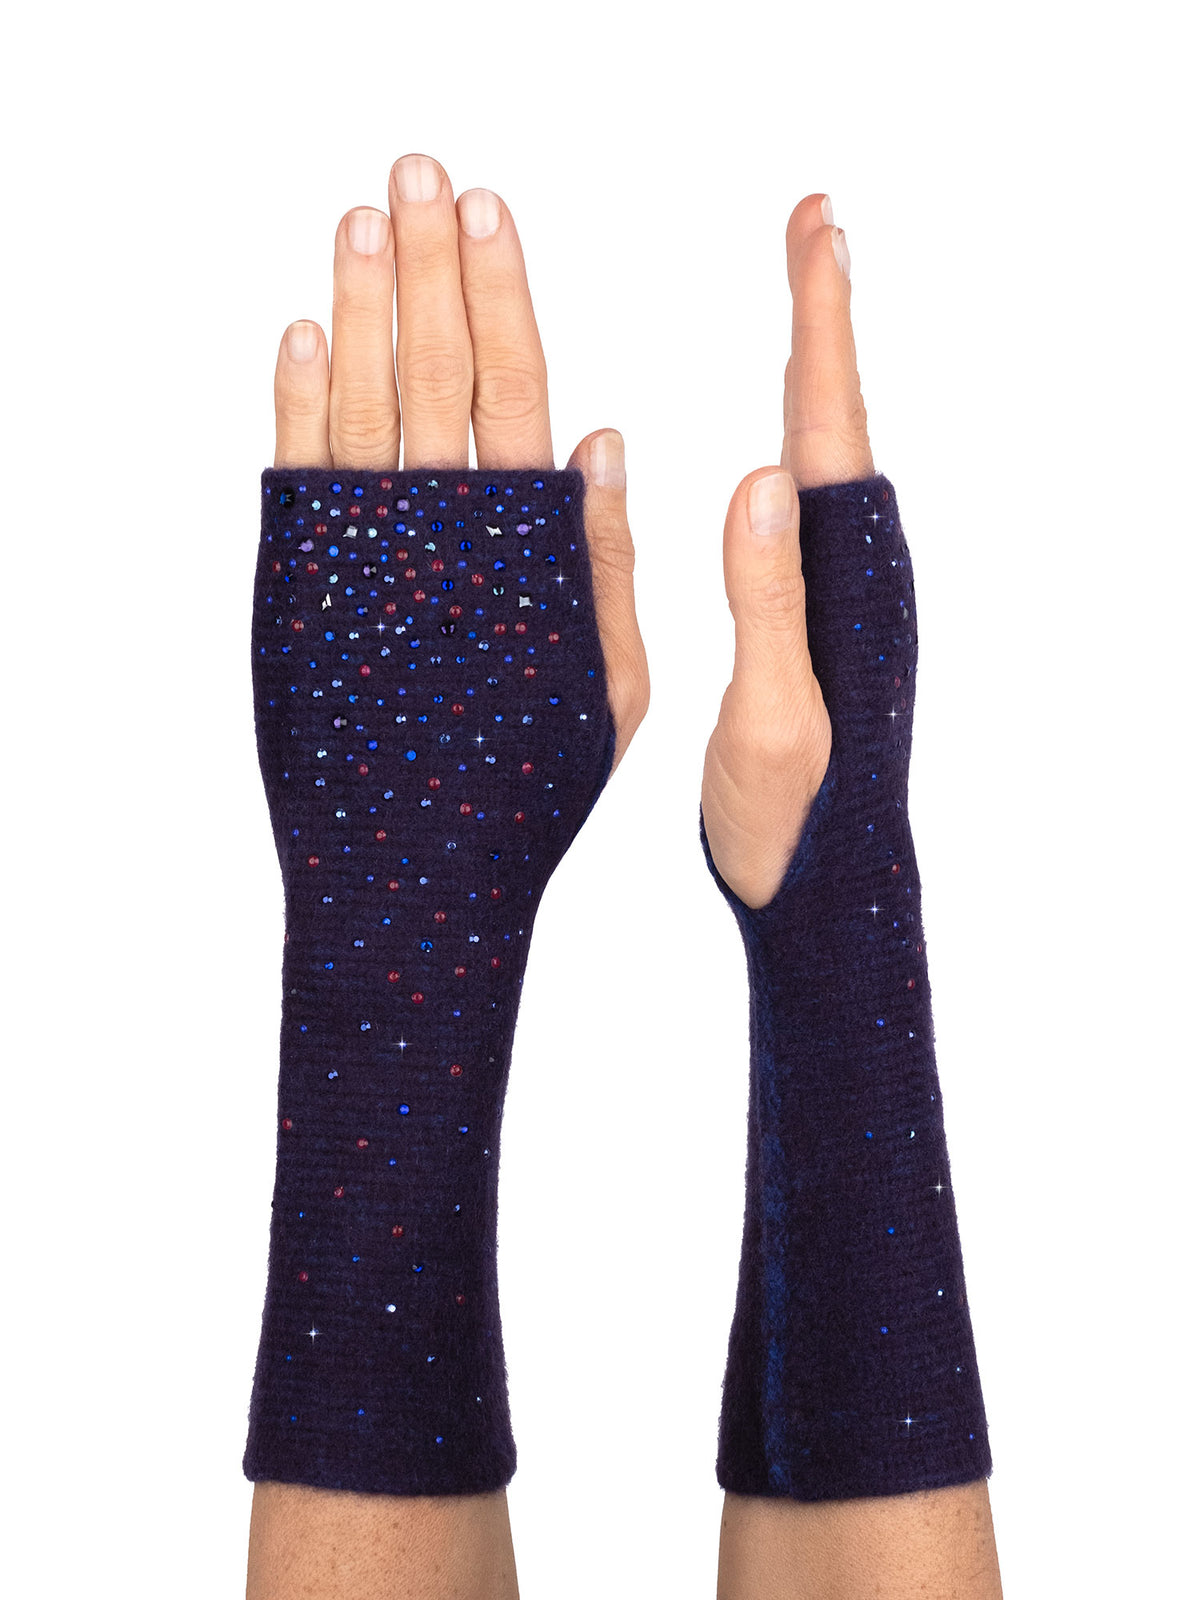 Plum colored crystal covered fingerless gloves.